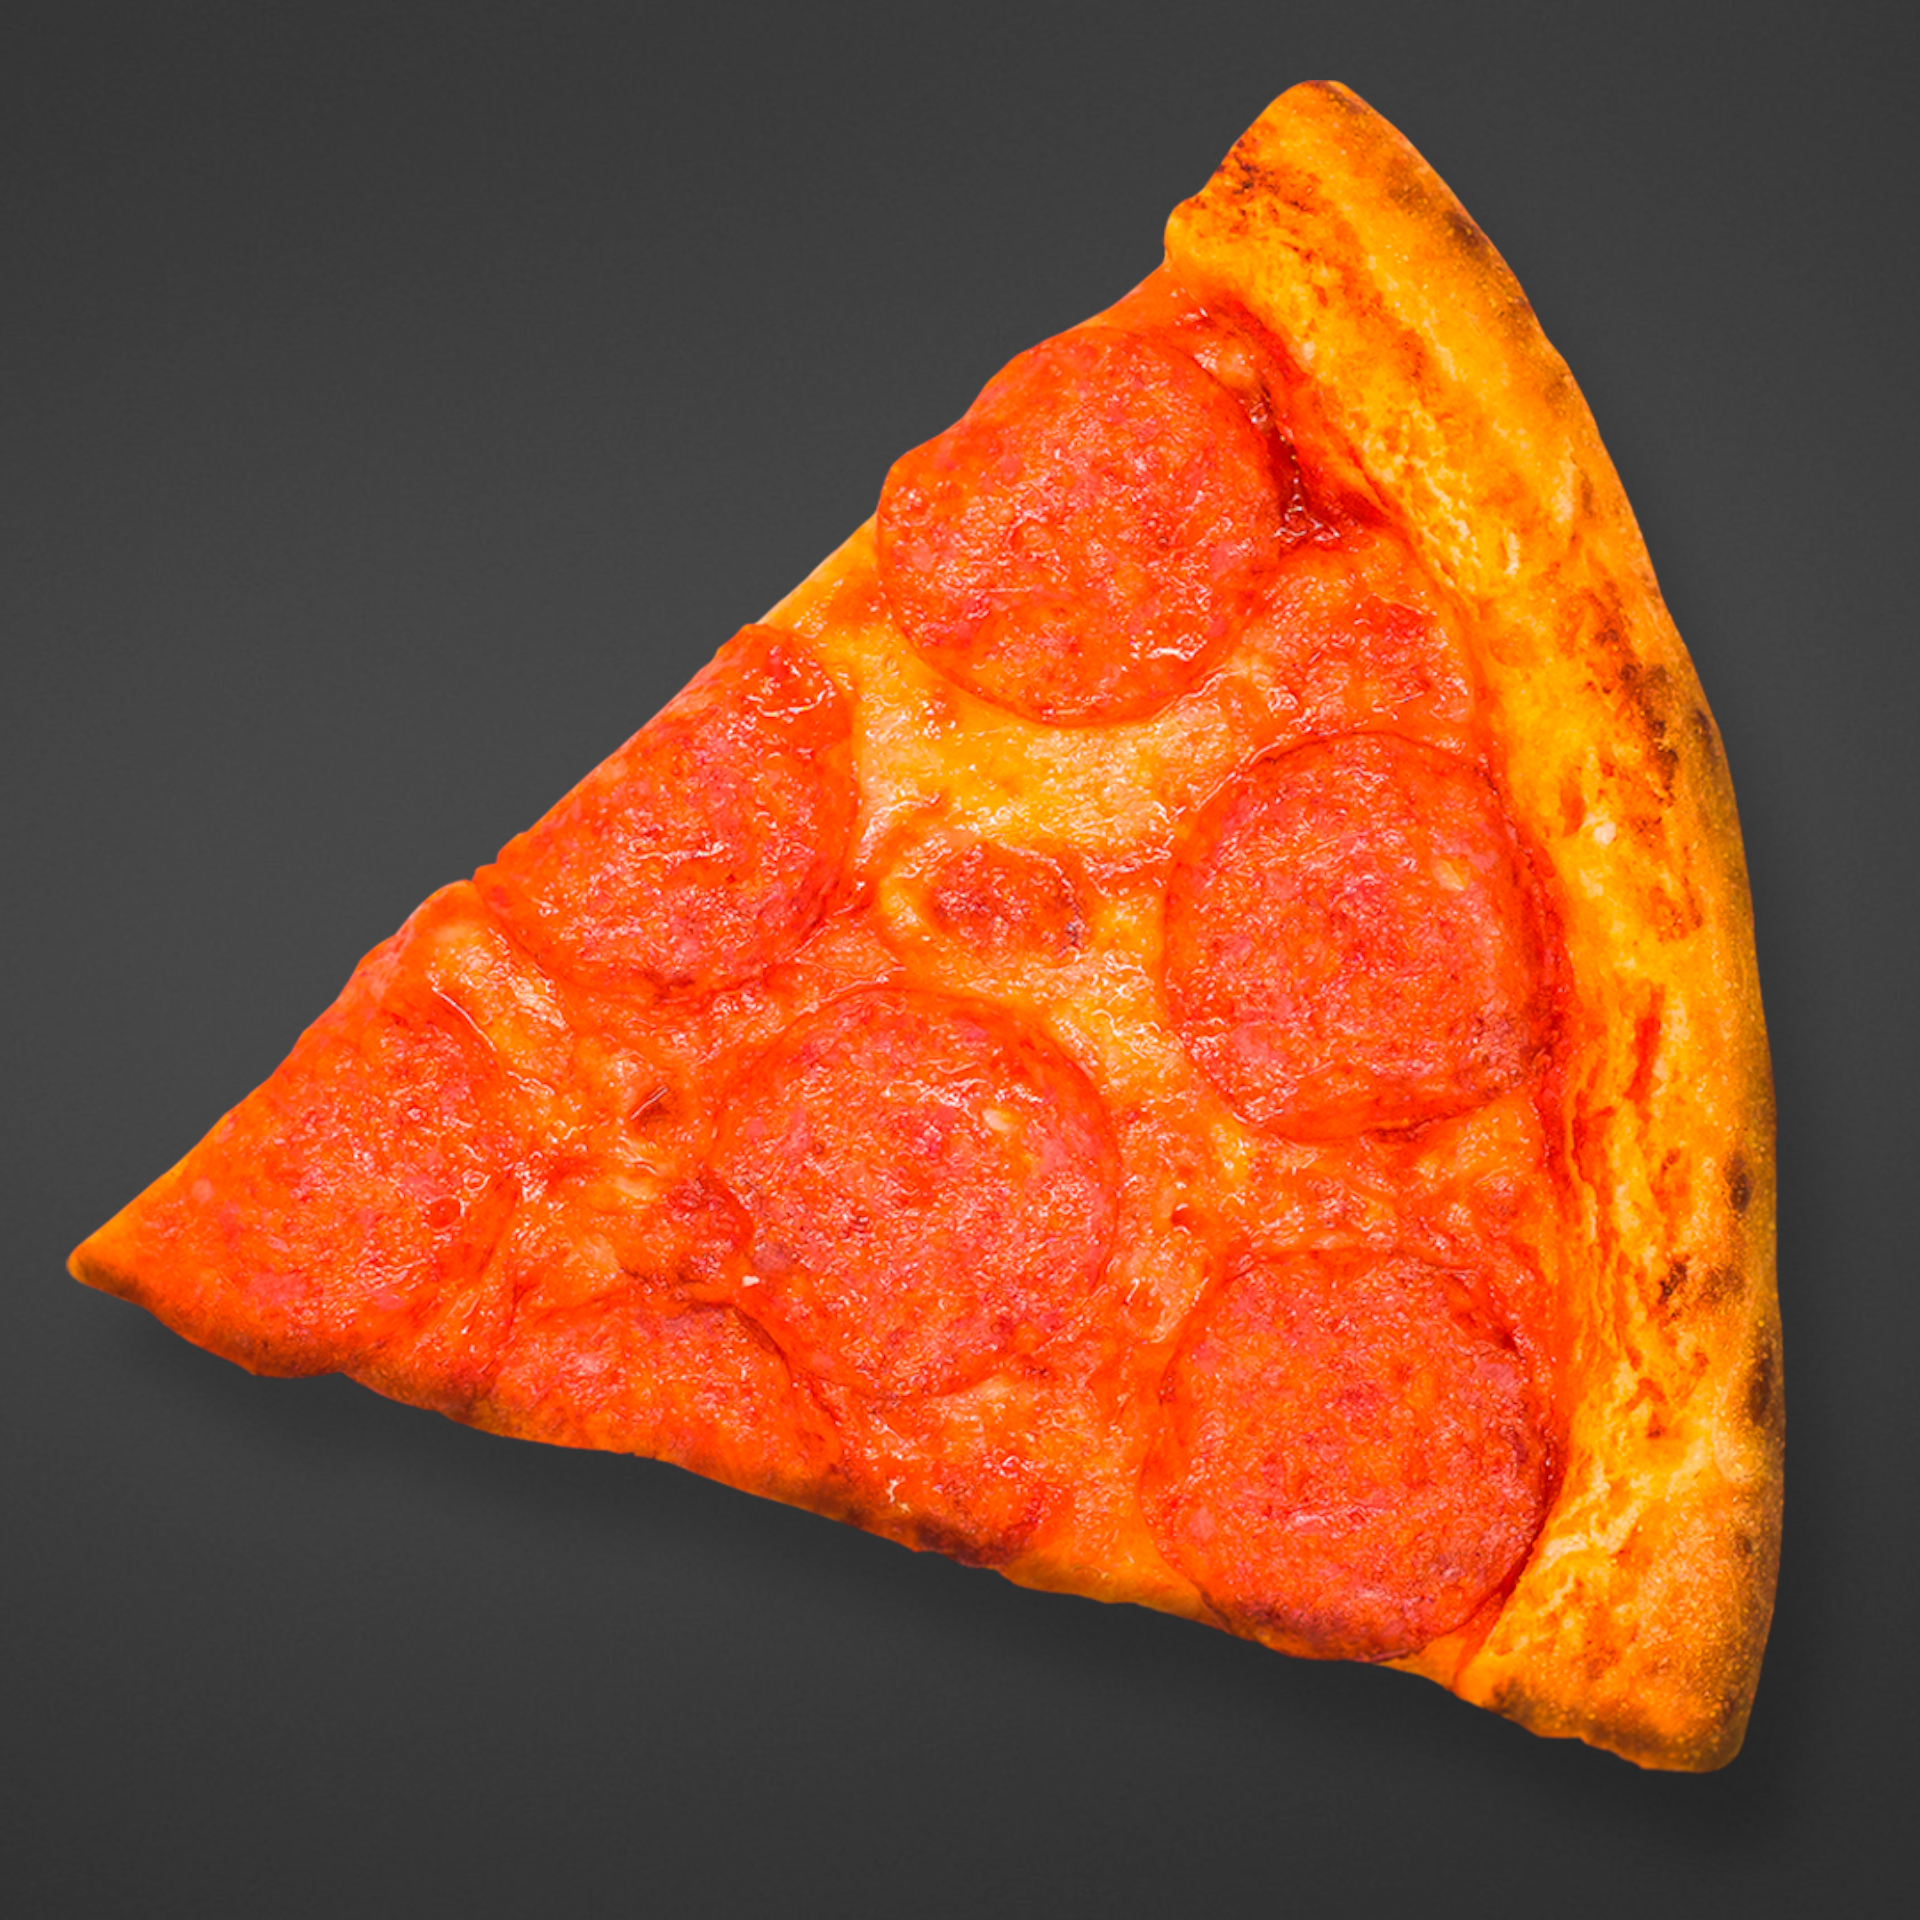 состав пиццы маргарита и пепперони фото 112